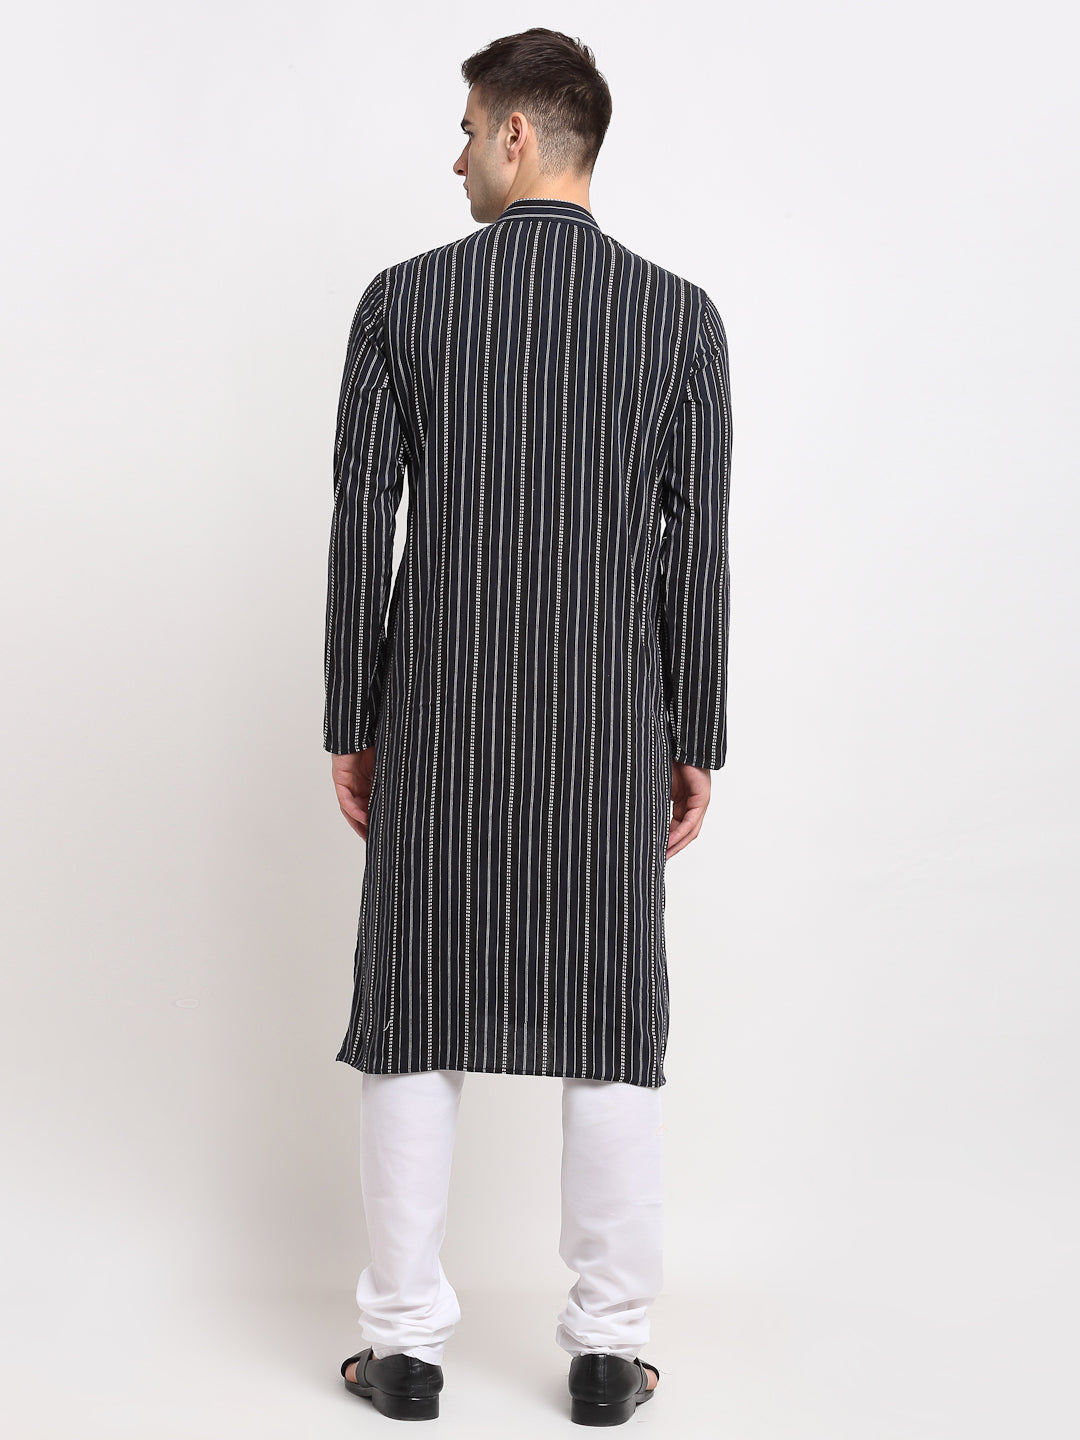 Jompers Men's Black Cotton Striped Kurta Payjama Sets